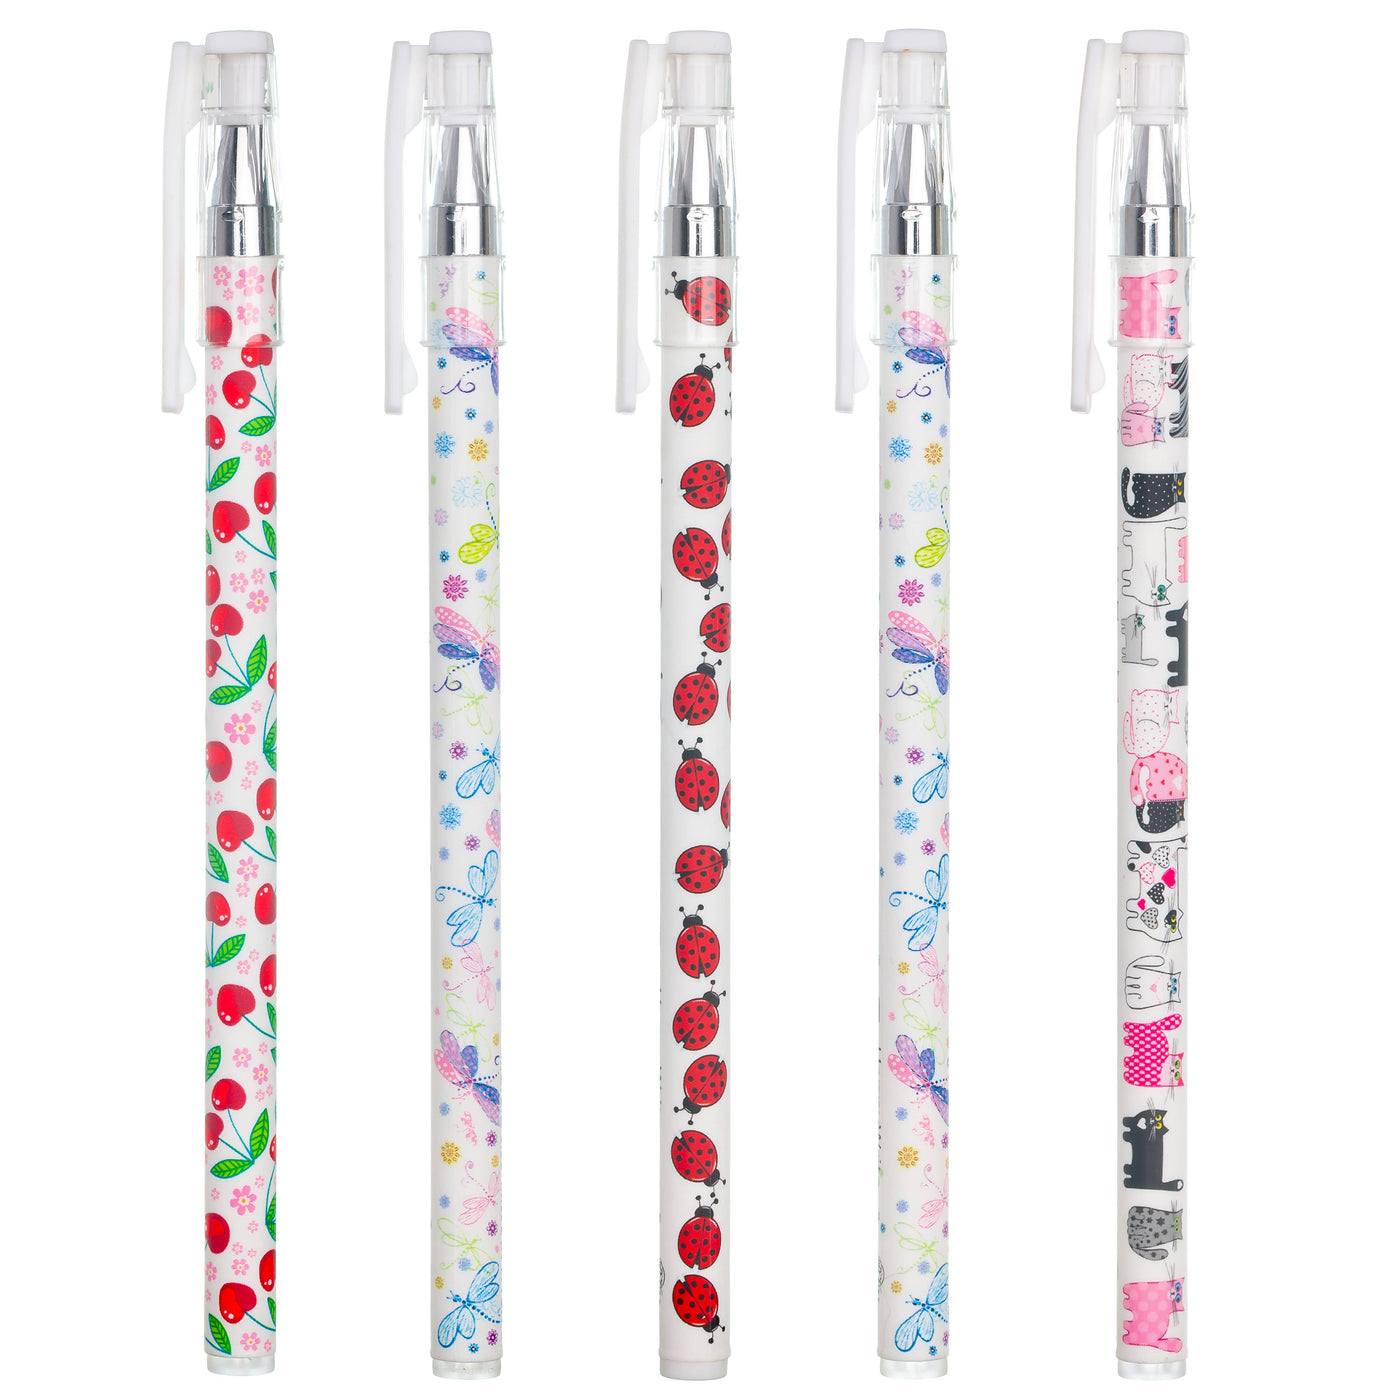 HappyWrite 5 Pack Ballpoint Pens, 0.5mm, Ladybugs, Cherries, Butterflies